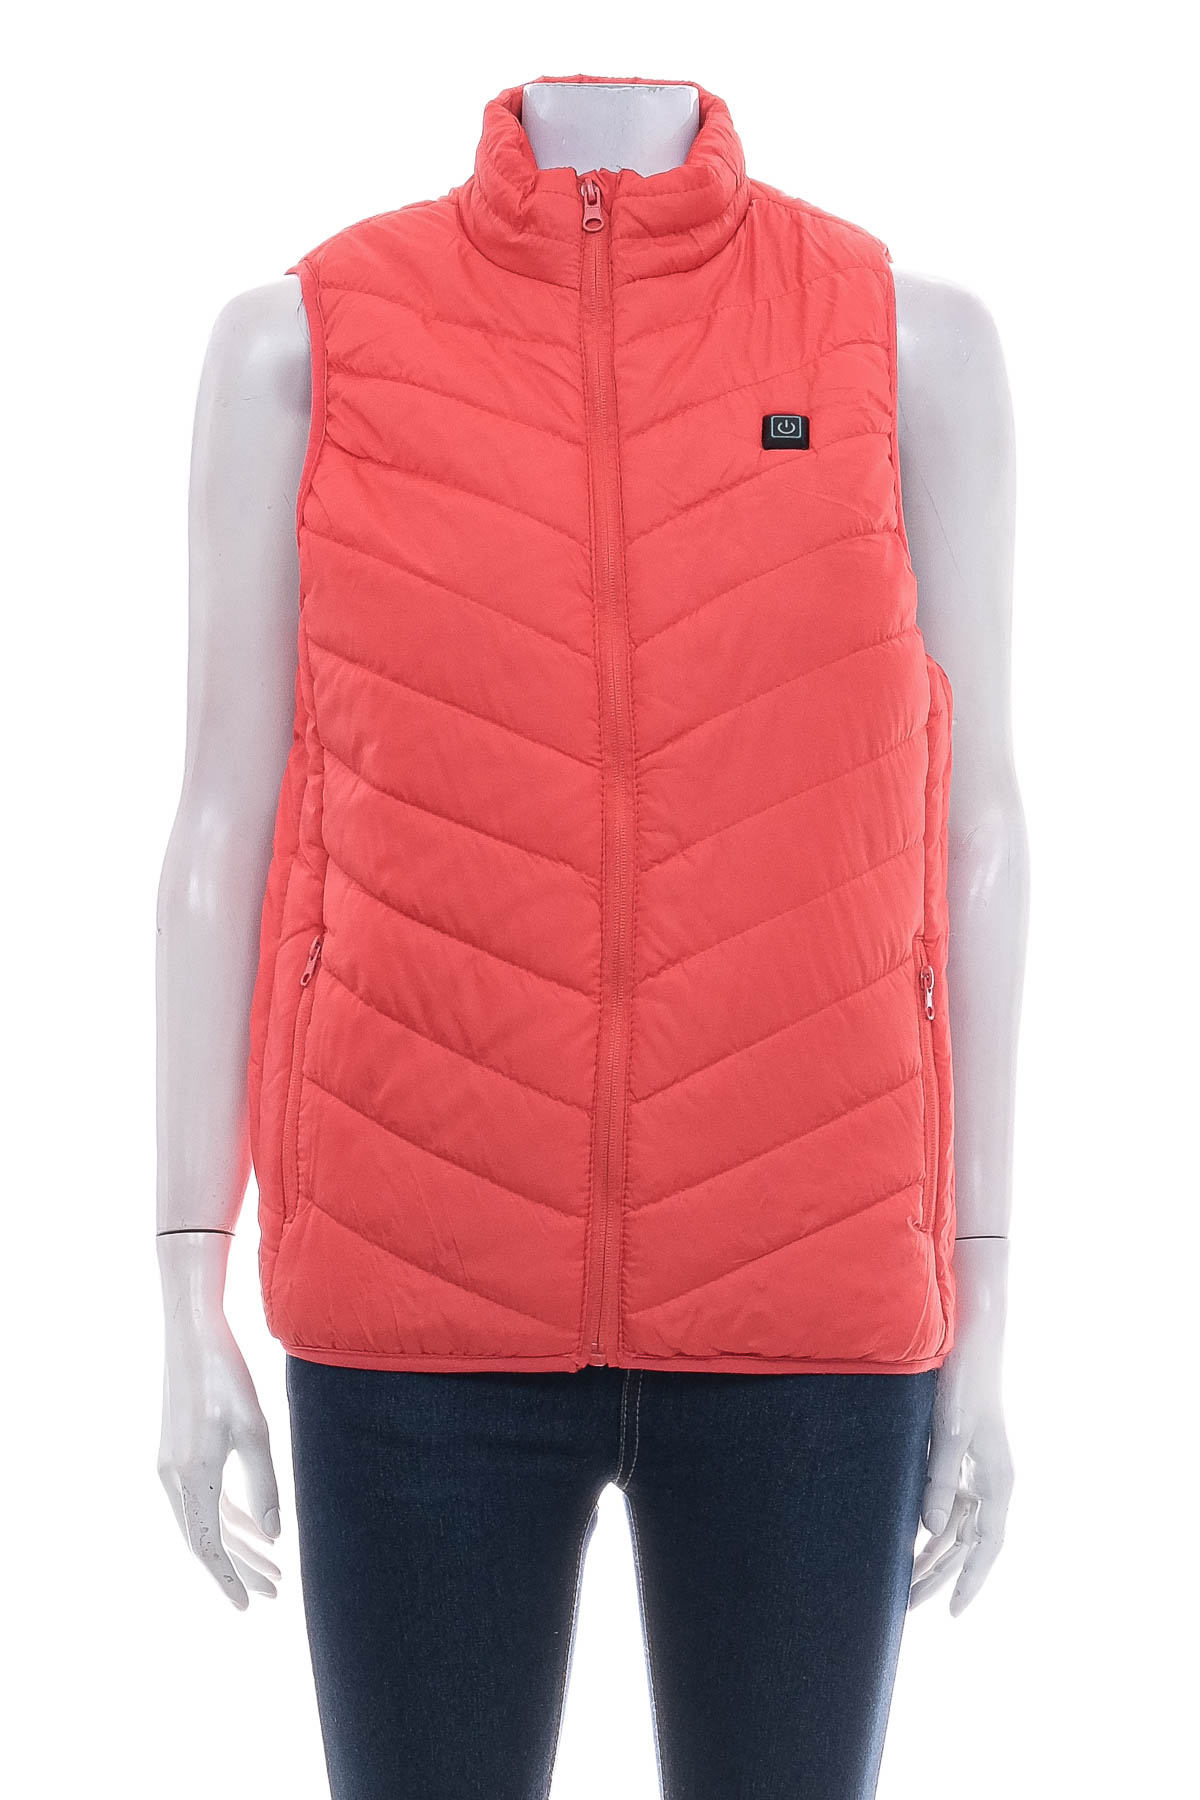 Women's vest with heater - 0